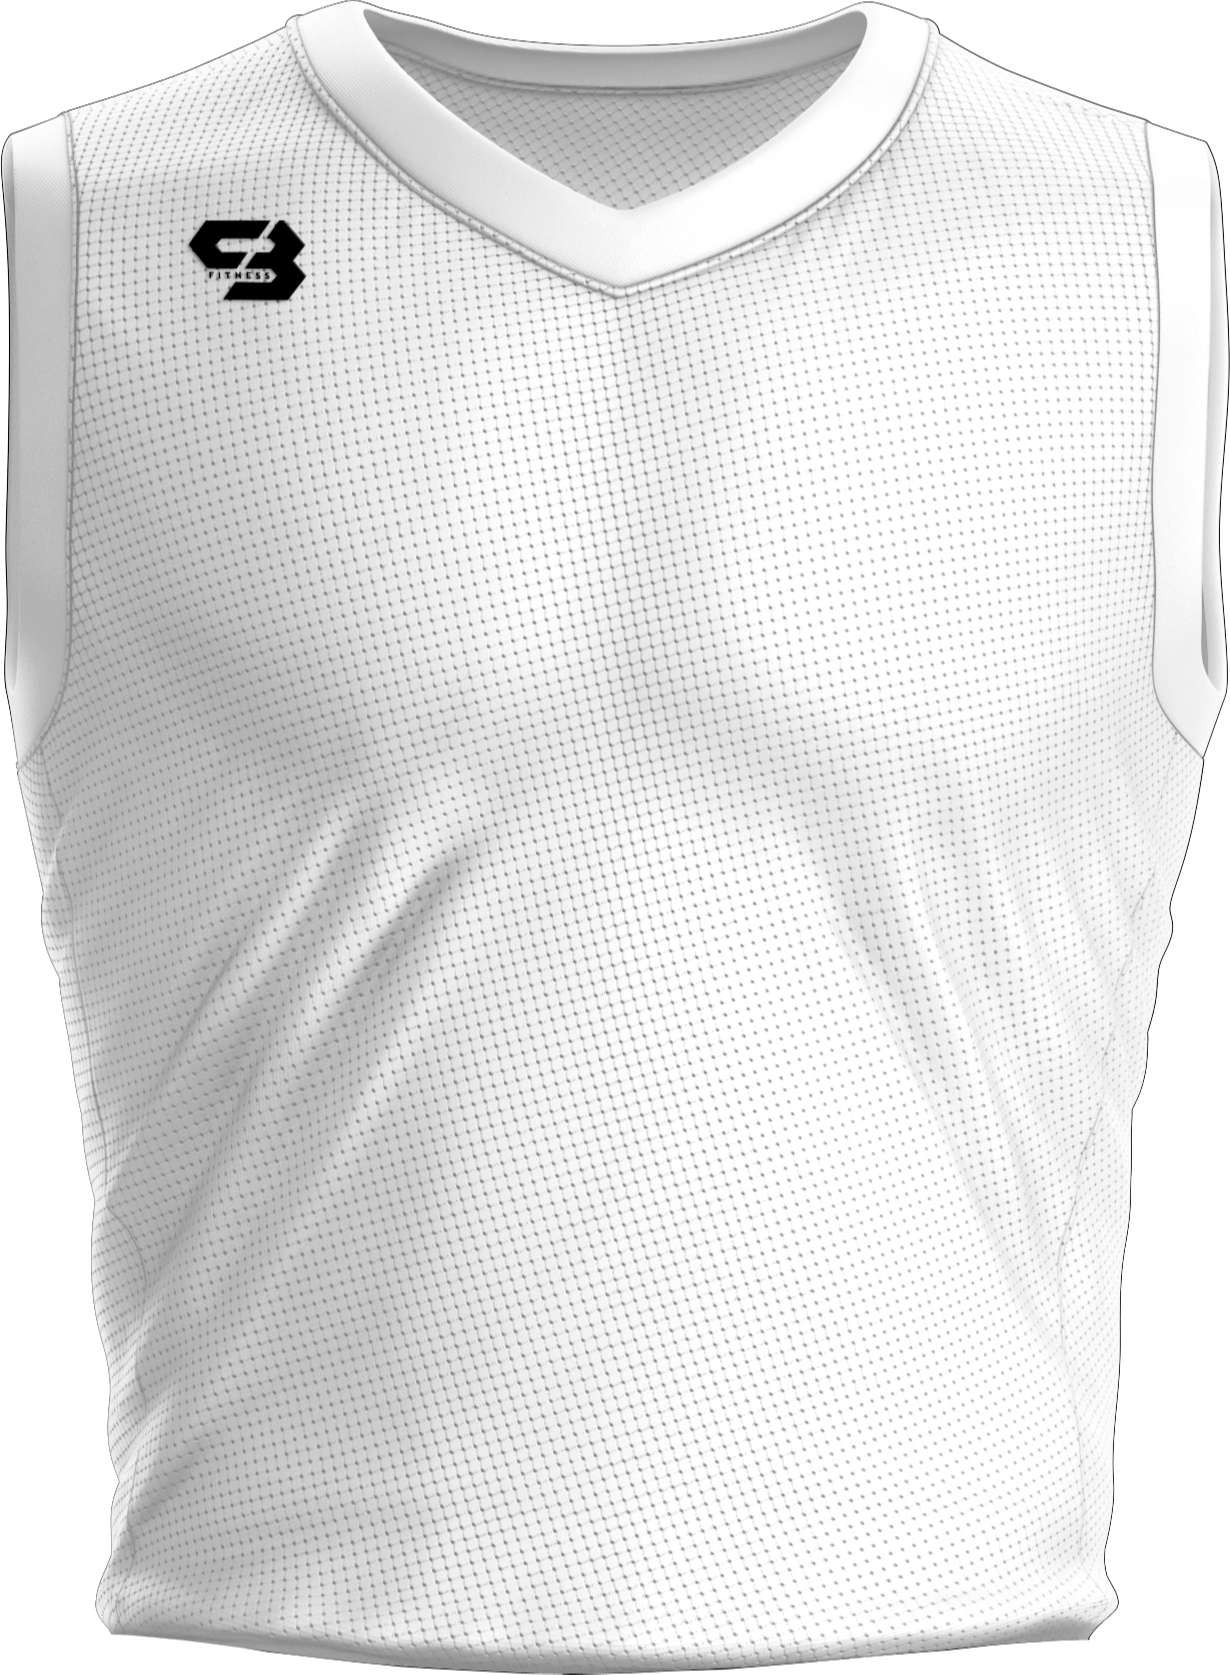 Basketball Practice Jersey - Reversible - Custom Design – SB